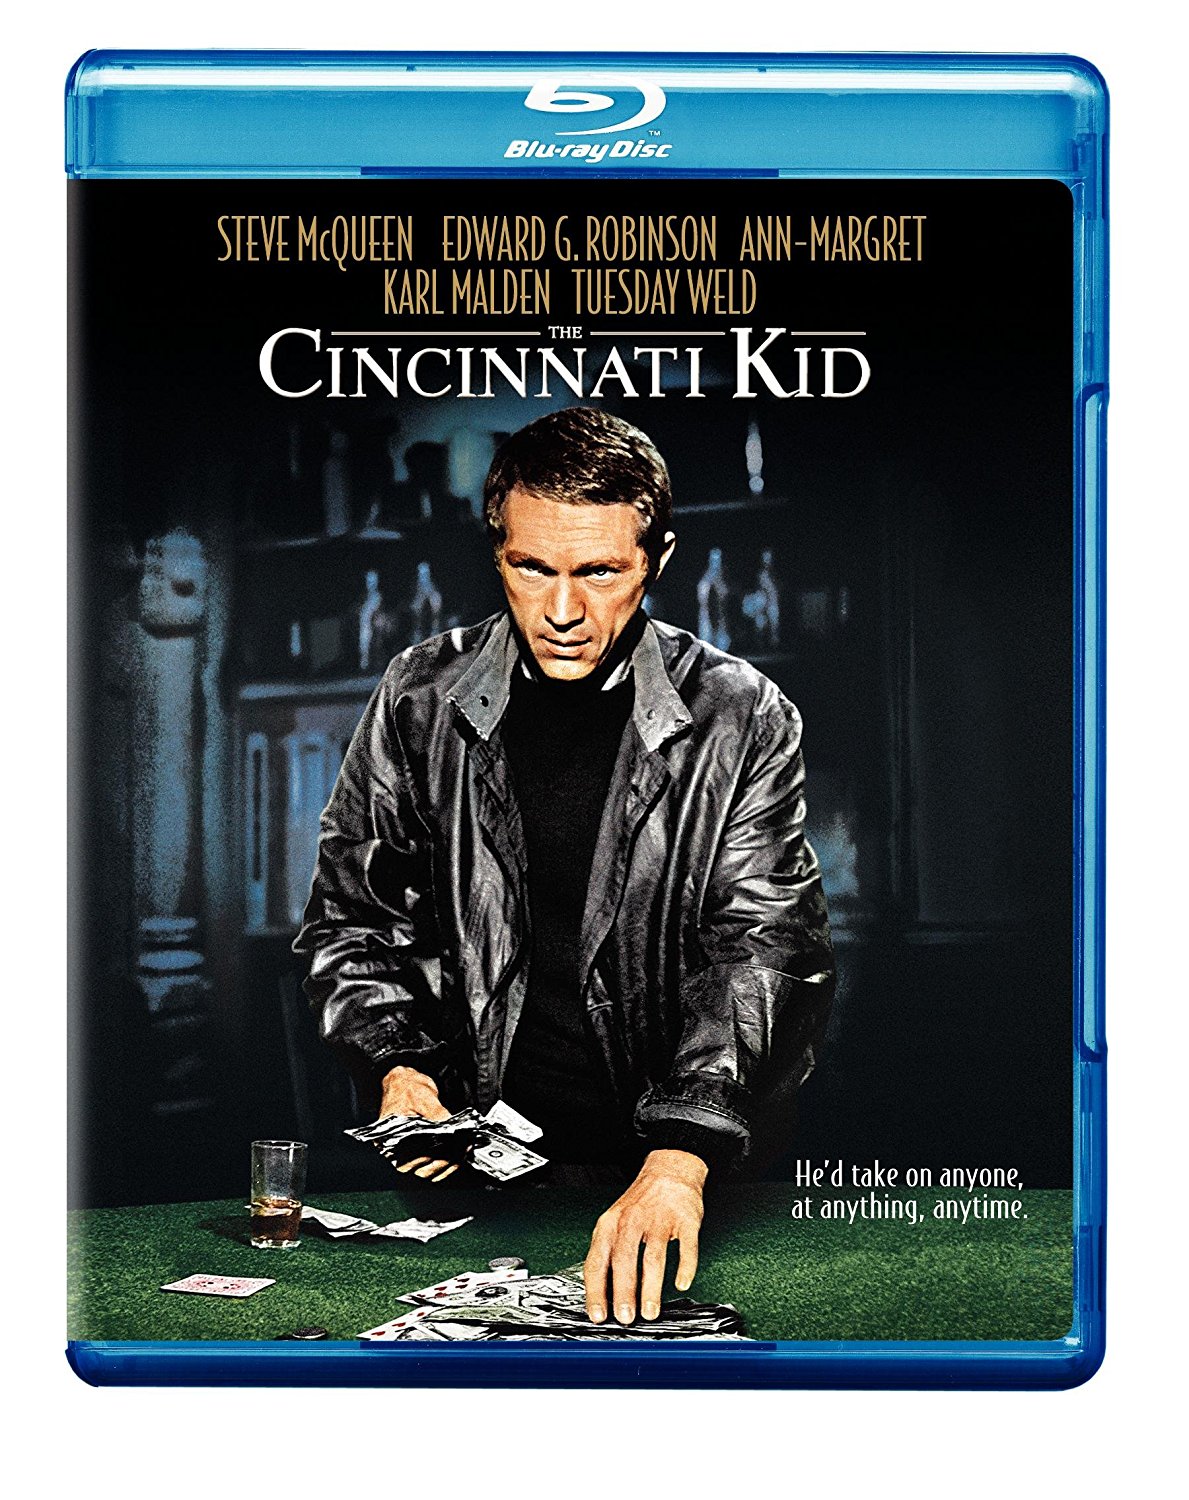 The Cincinnati Kid, starring Paul Newman, Edward G. Robinson, Ann-Margaret, Karl Malden, Rip Torn, Joan Blondell - He'd take on anyone, at anything, anytime